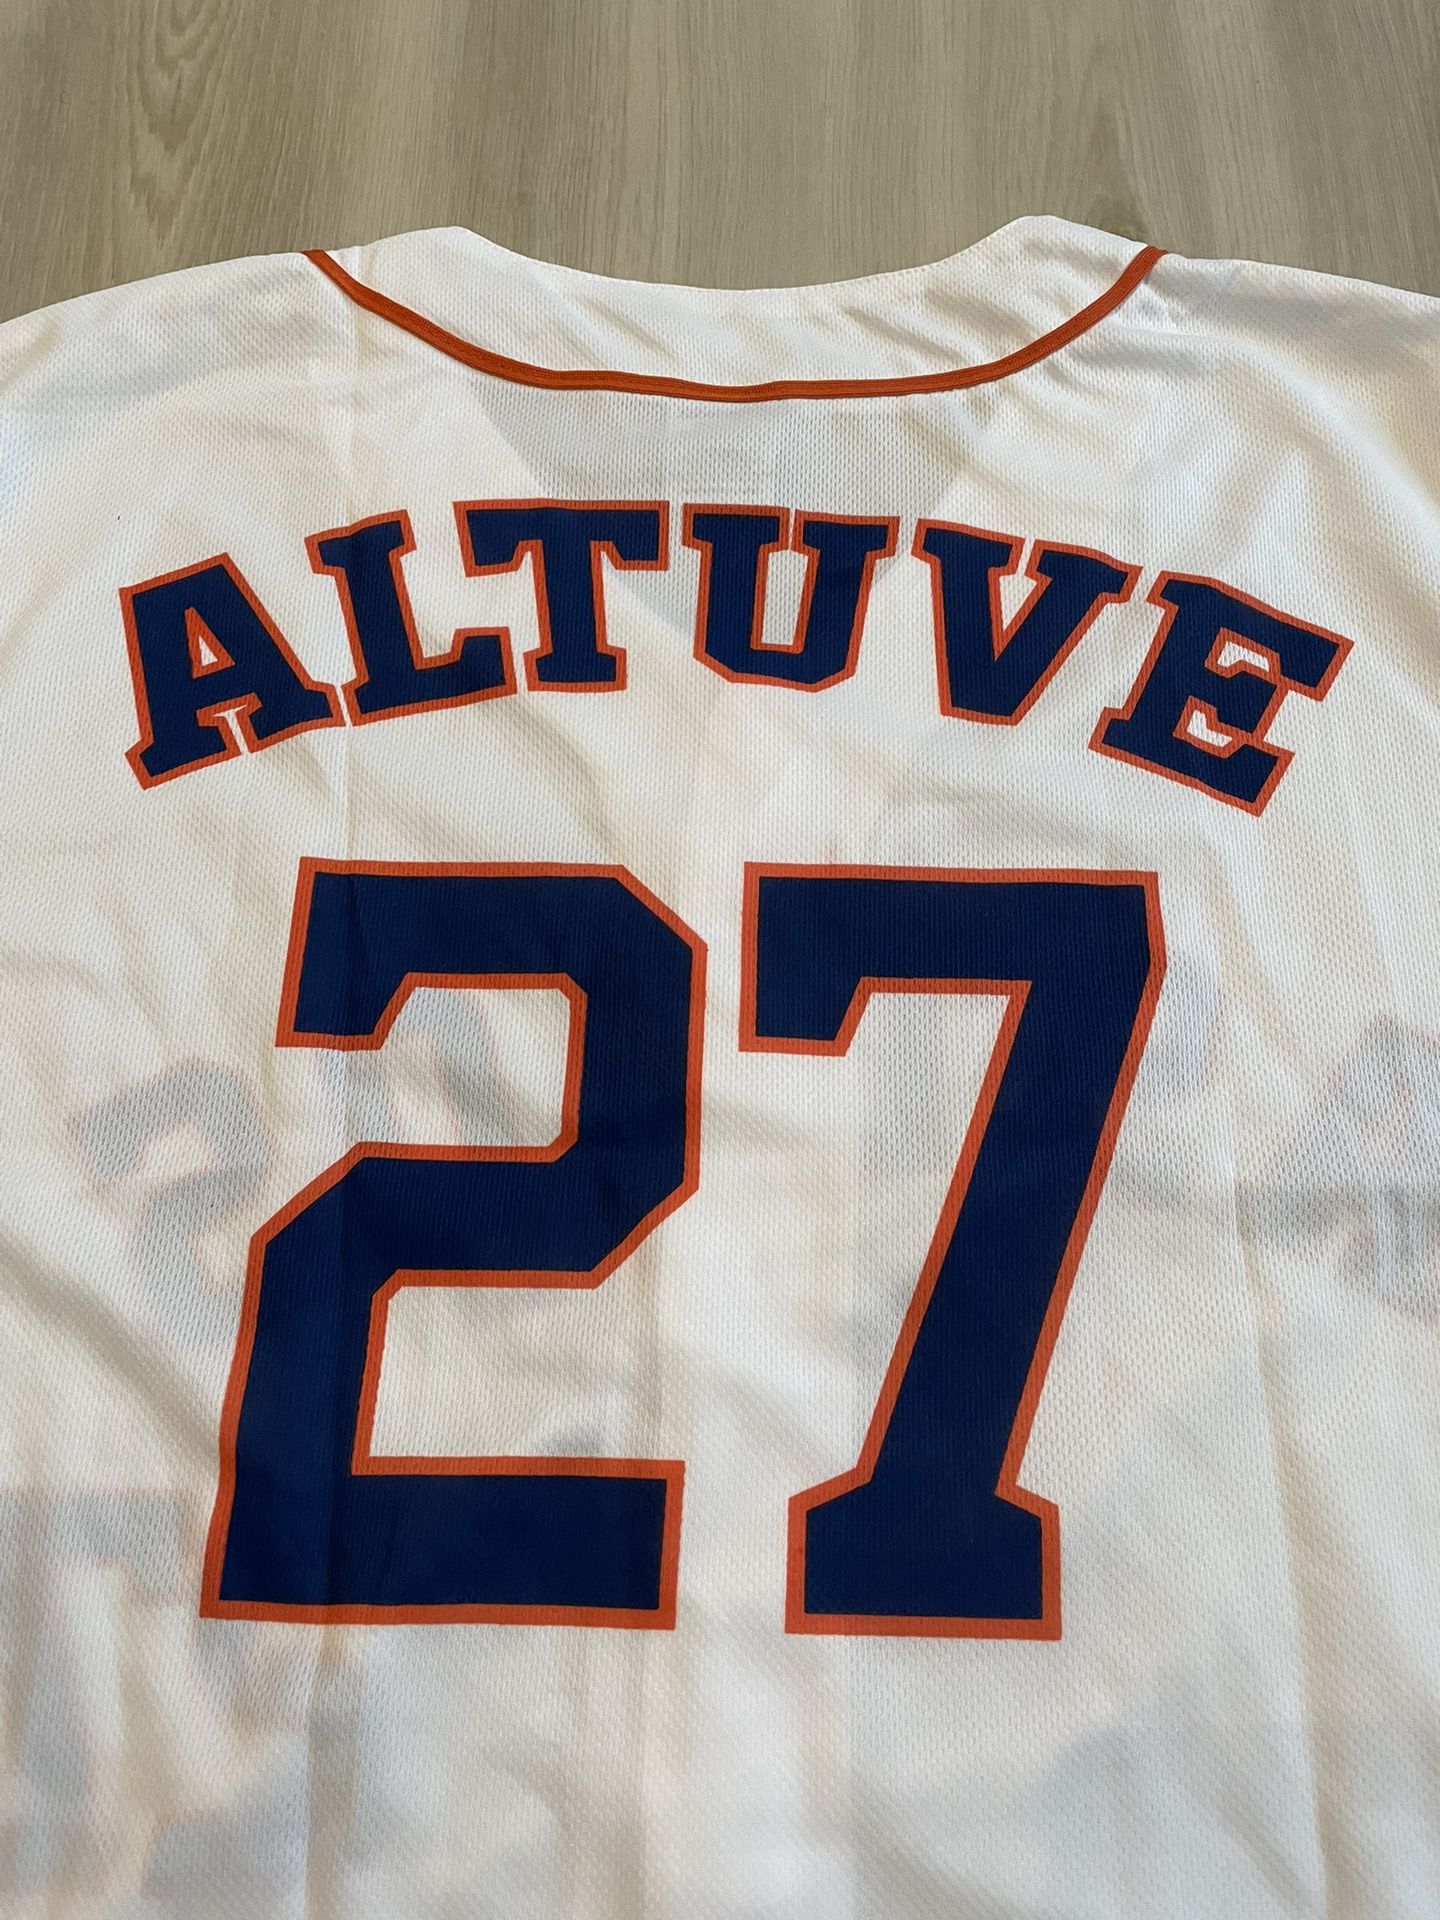 NEW José Altuve #27 Houston Astros MLB SGA Home Jersey Adult Size